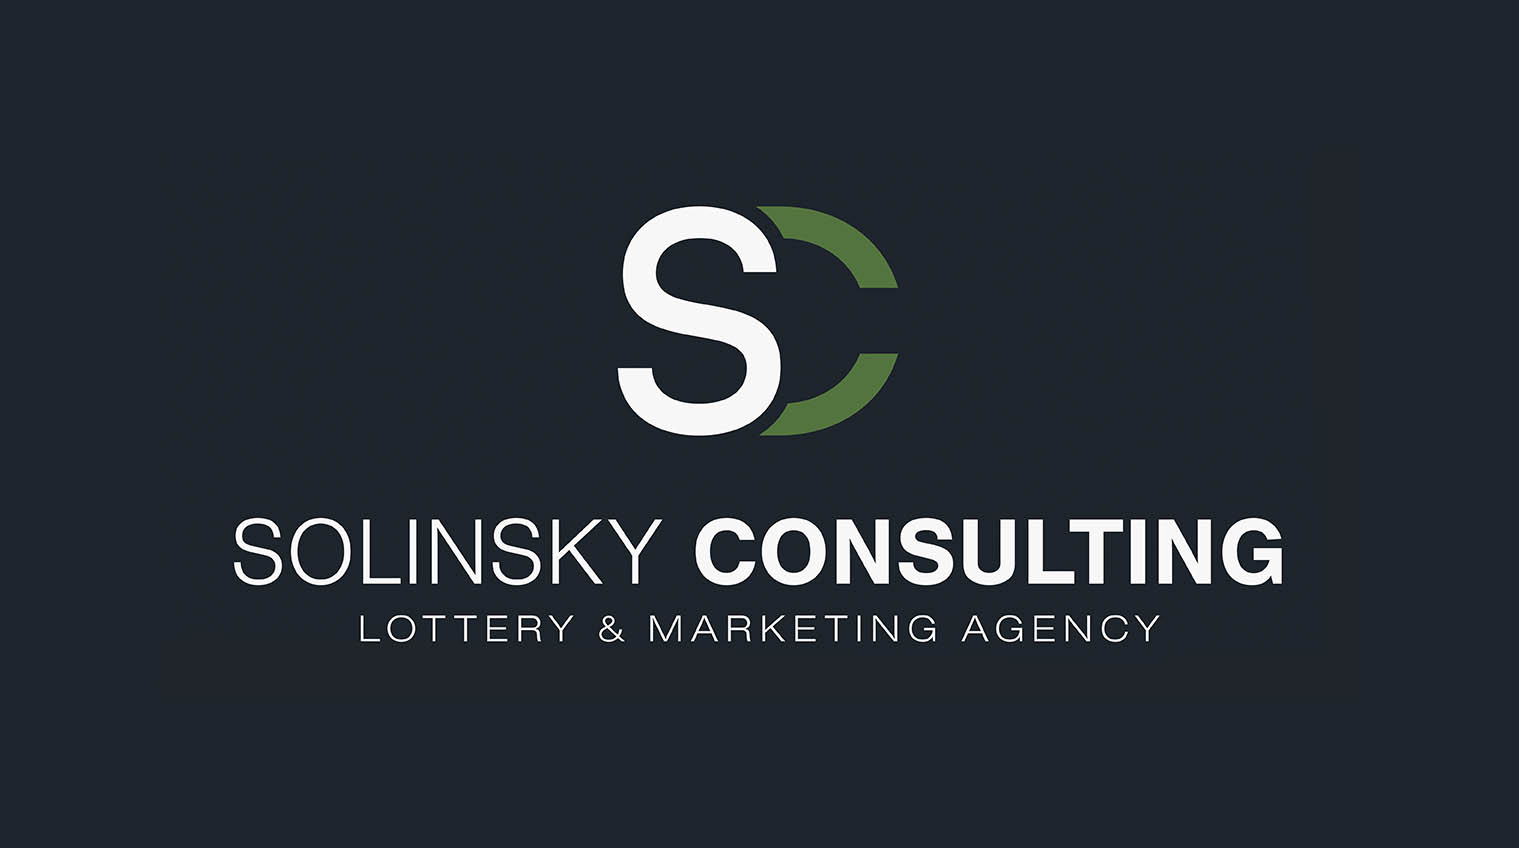 Solinsky Consulting logo design on a dark background - White Canvas Design